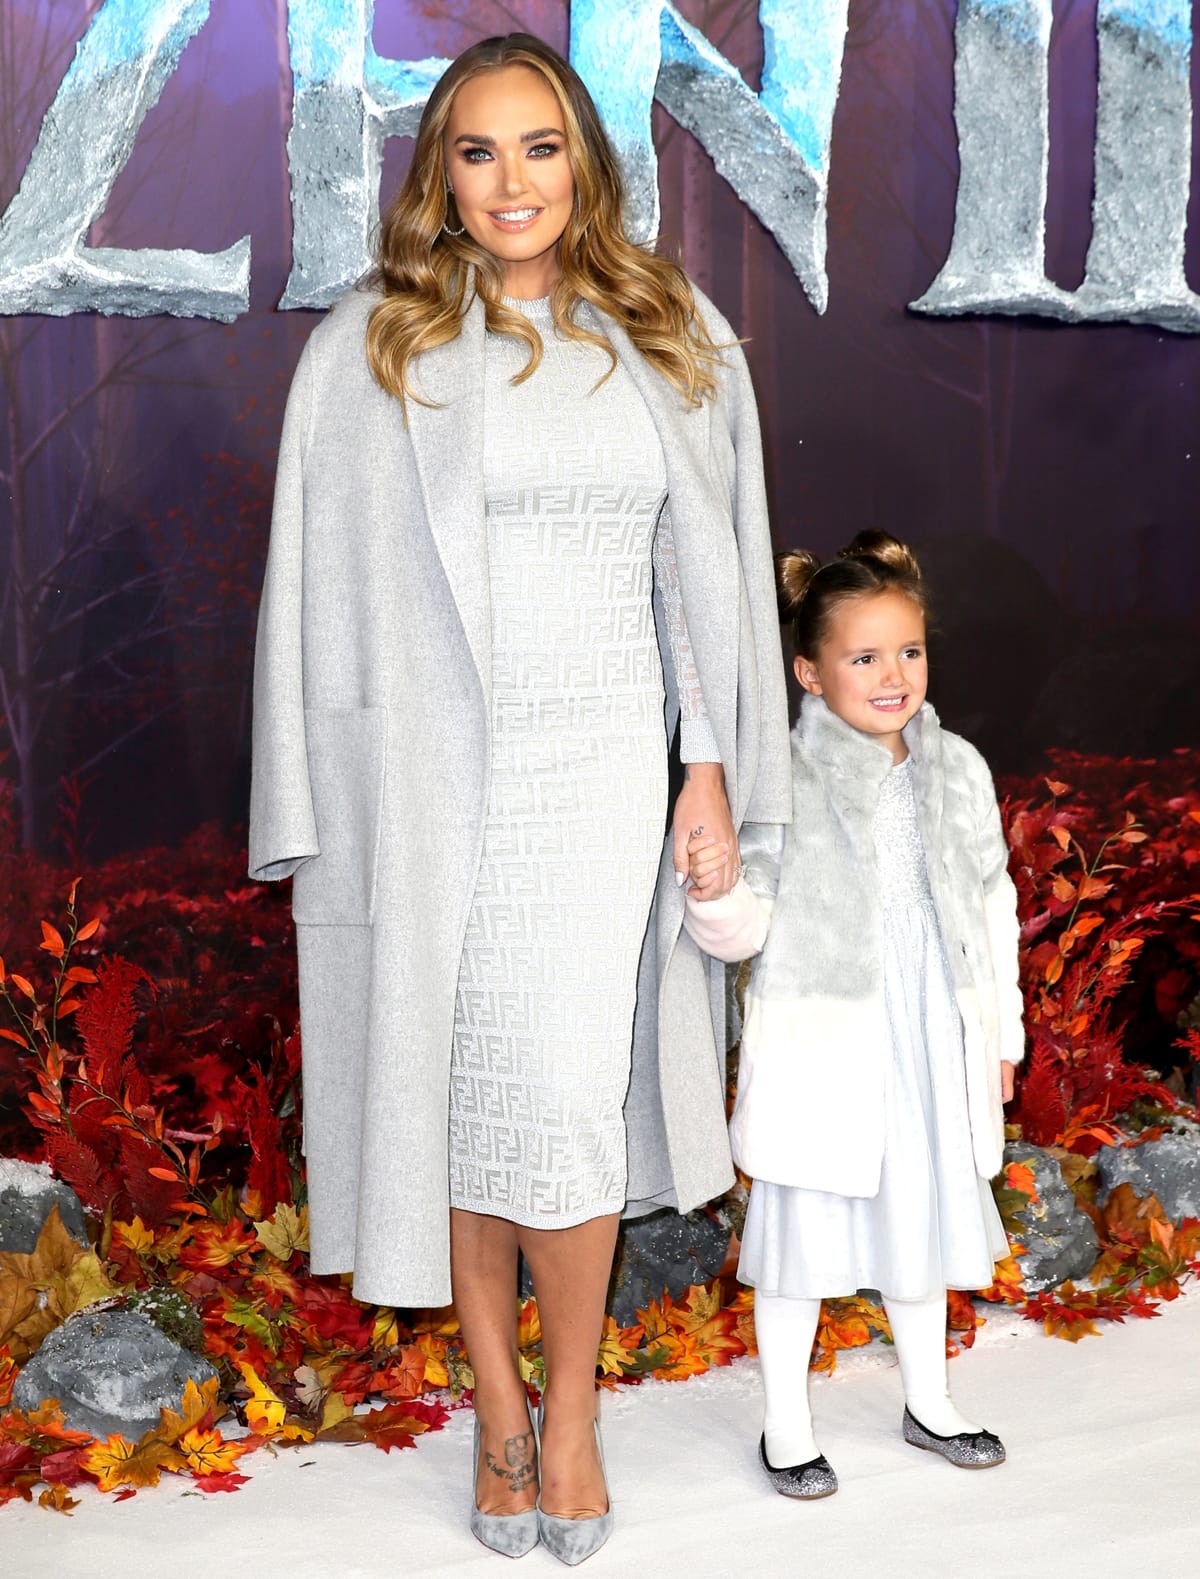 Tamara Ecclestone with her daughter Sophia Ecclestone Rutland at the European Premiere of “Frozen 2”